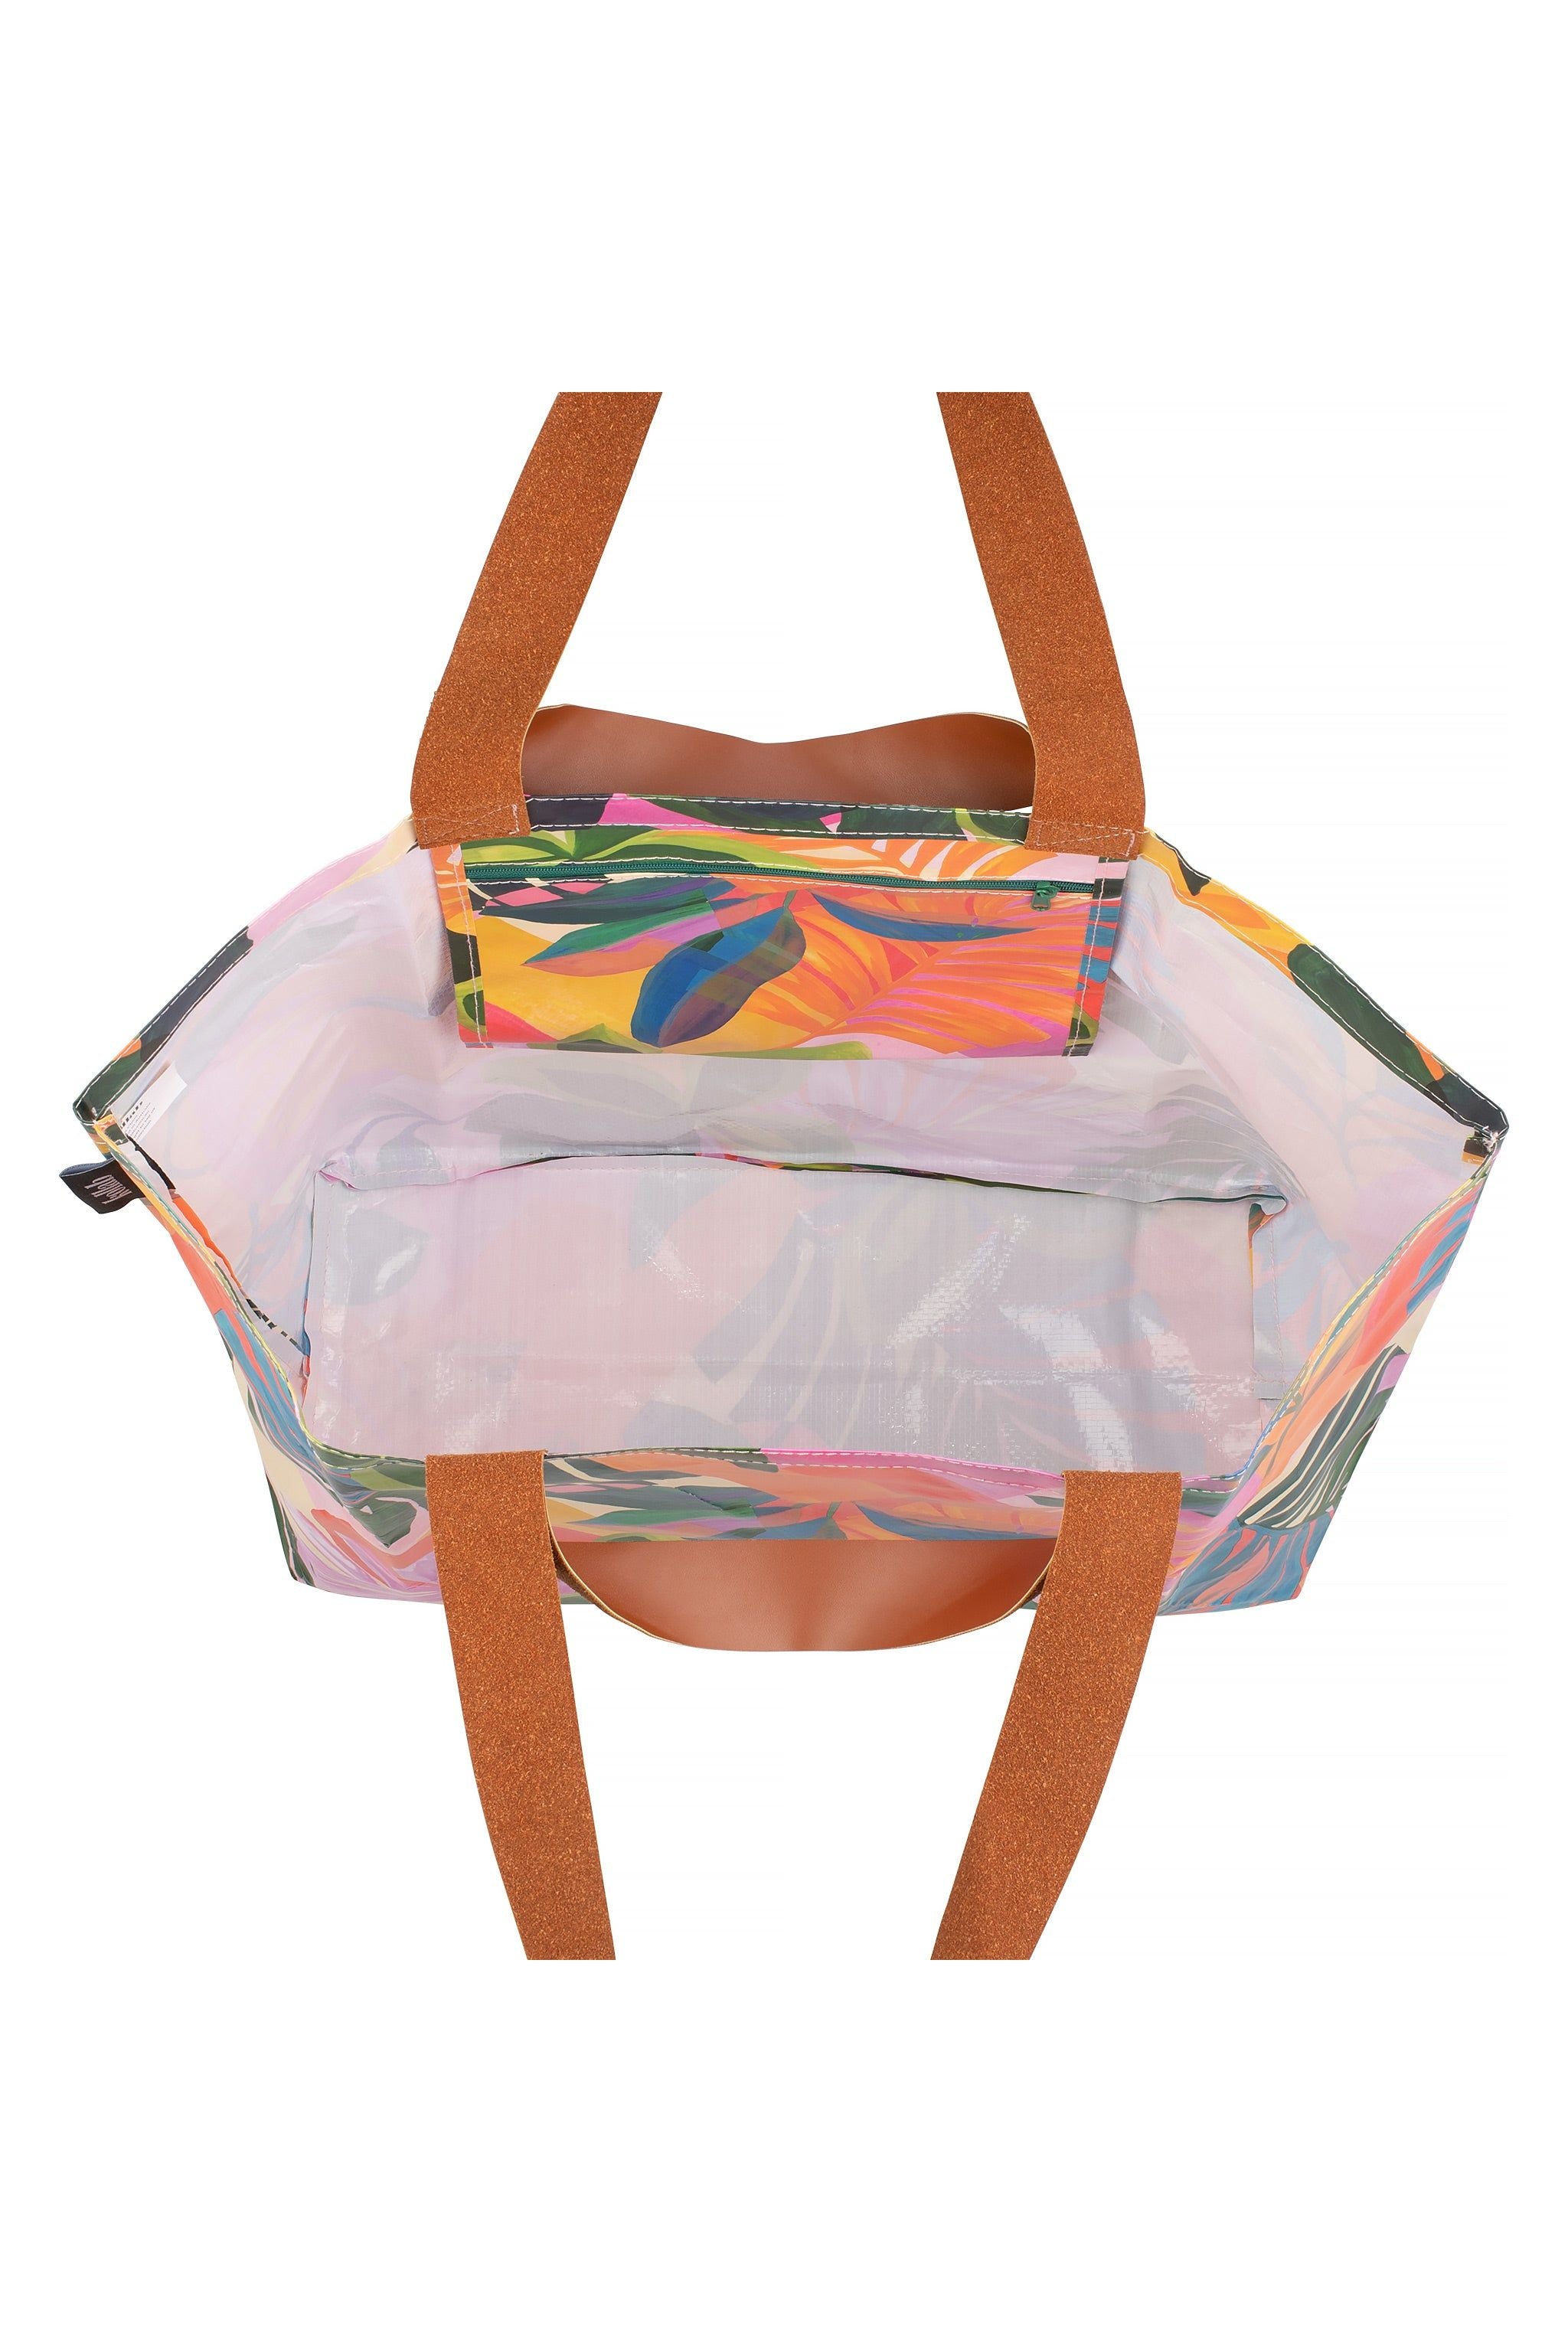 Kollab Beach Bag - Summertime